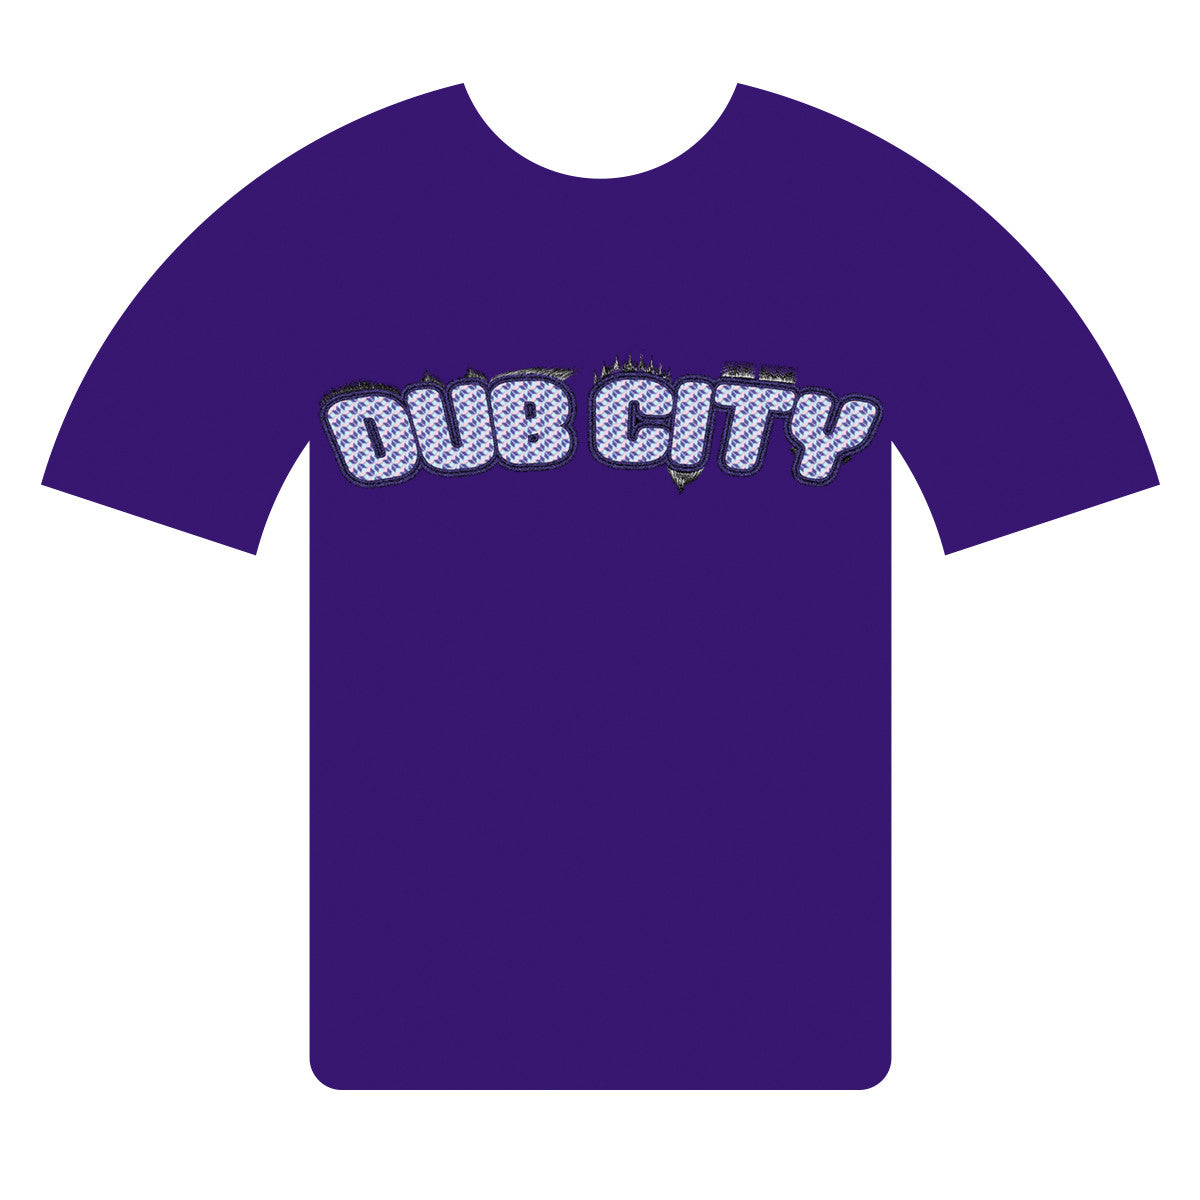 Dub City Do T-shirt